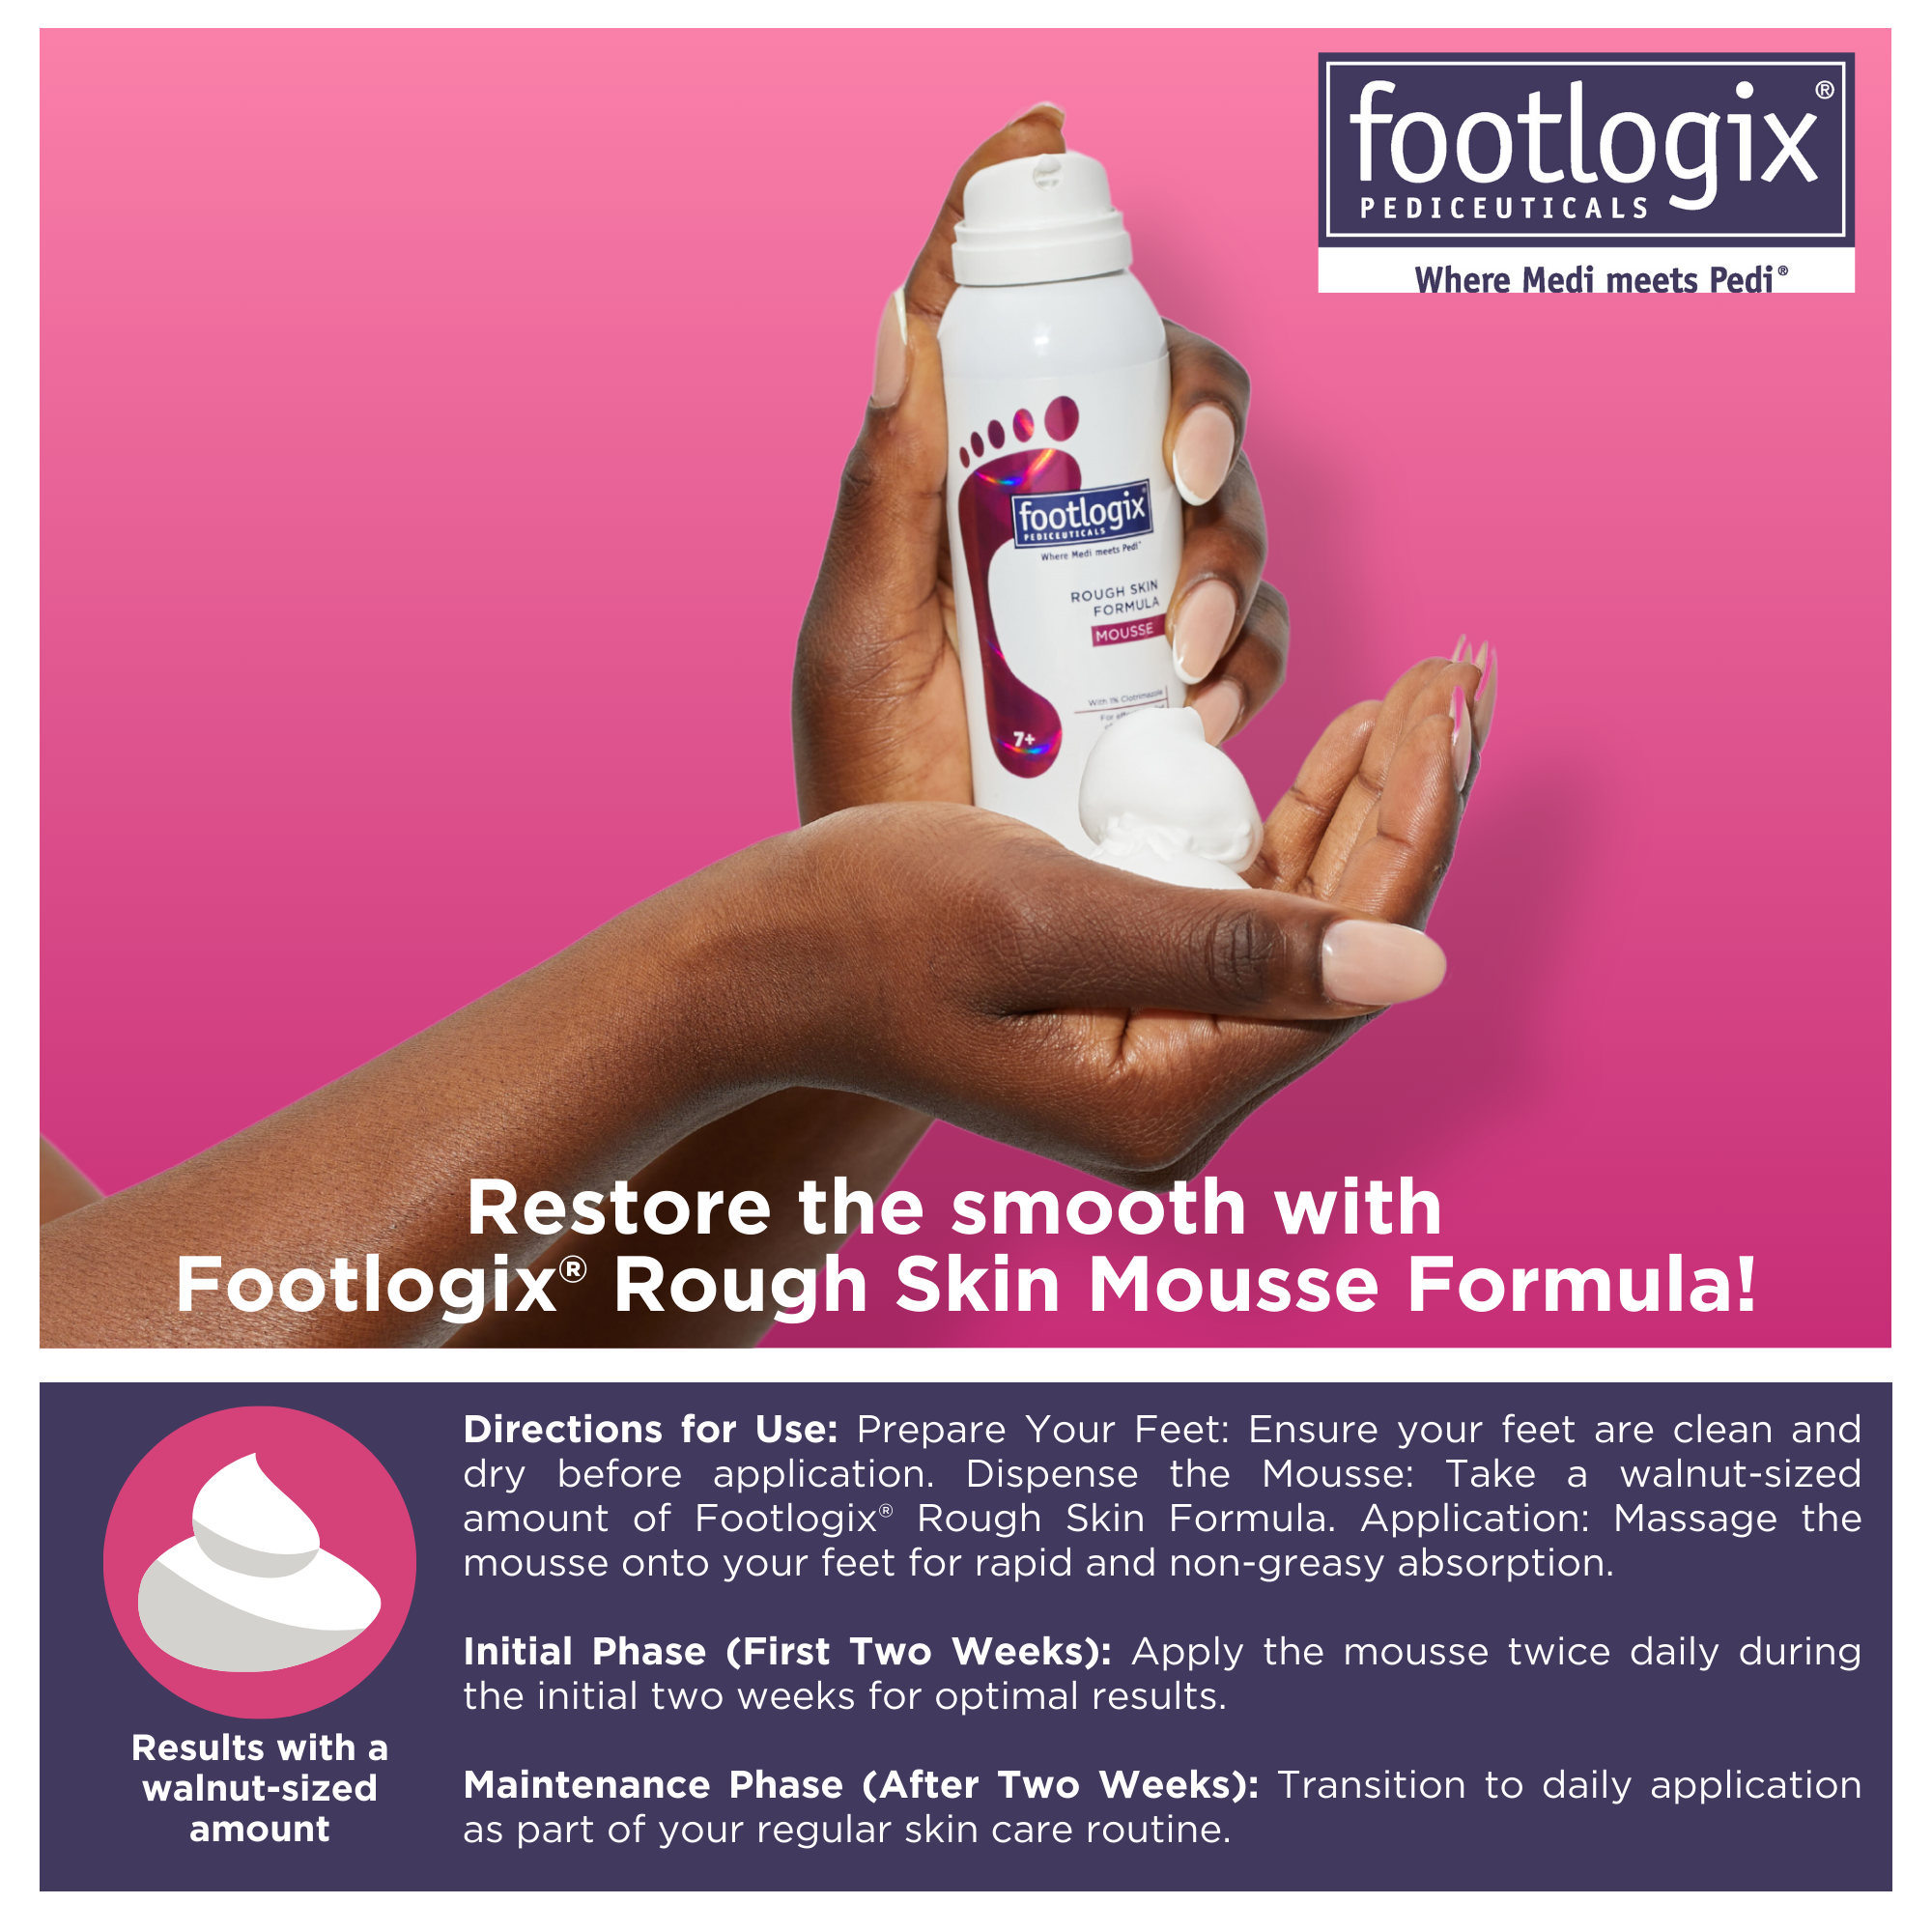 Footlogix Rough Skin Formula